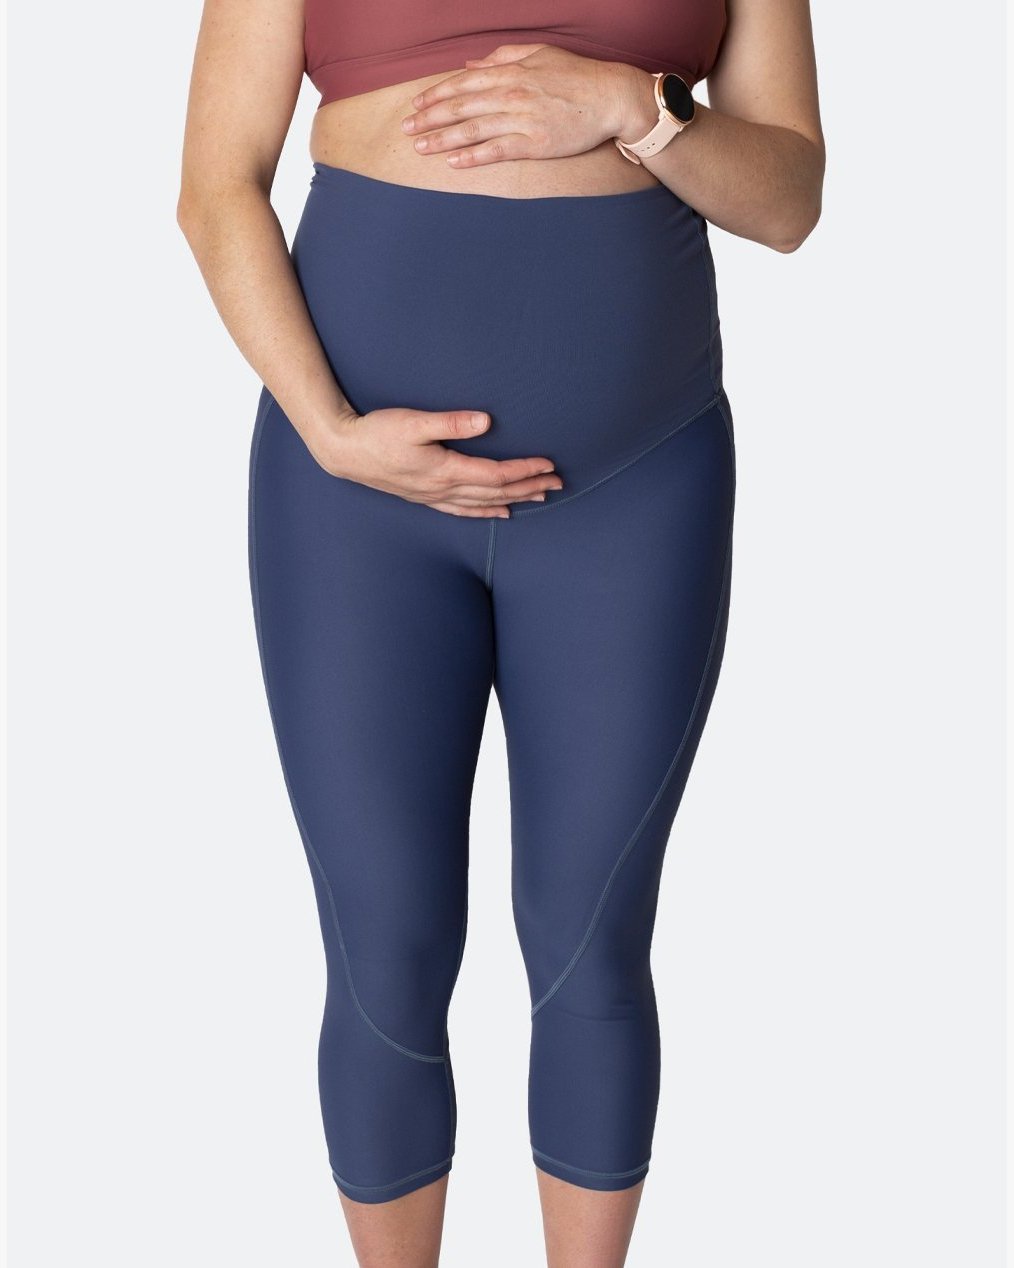 Buy Long maternity leggings Online in Dubai & the UAE